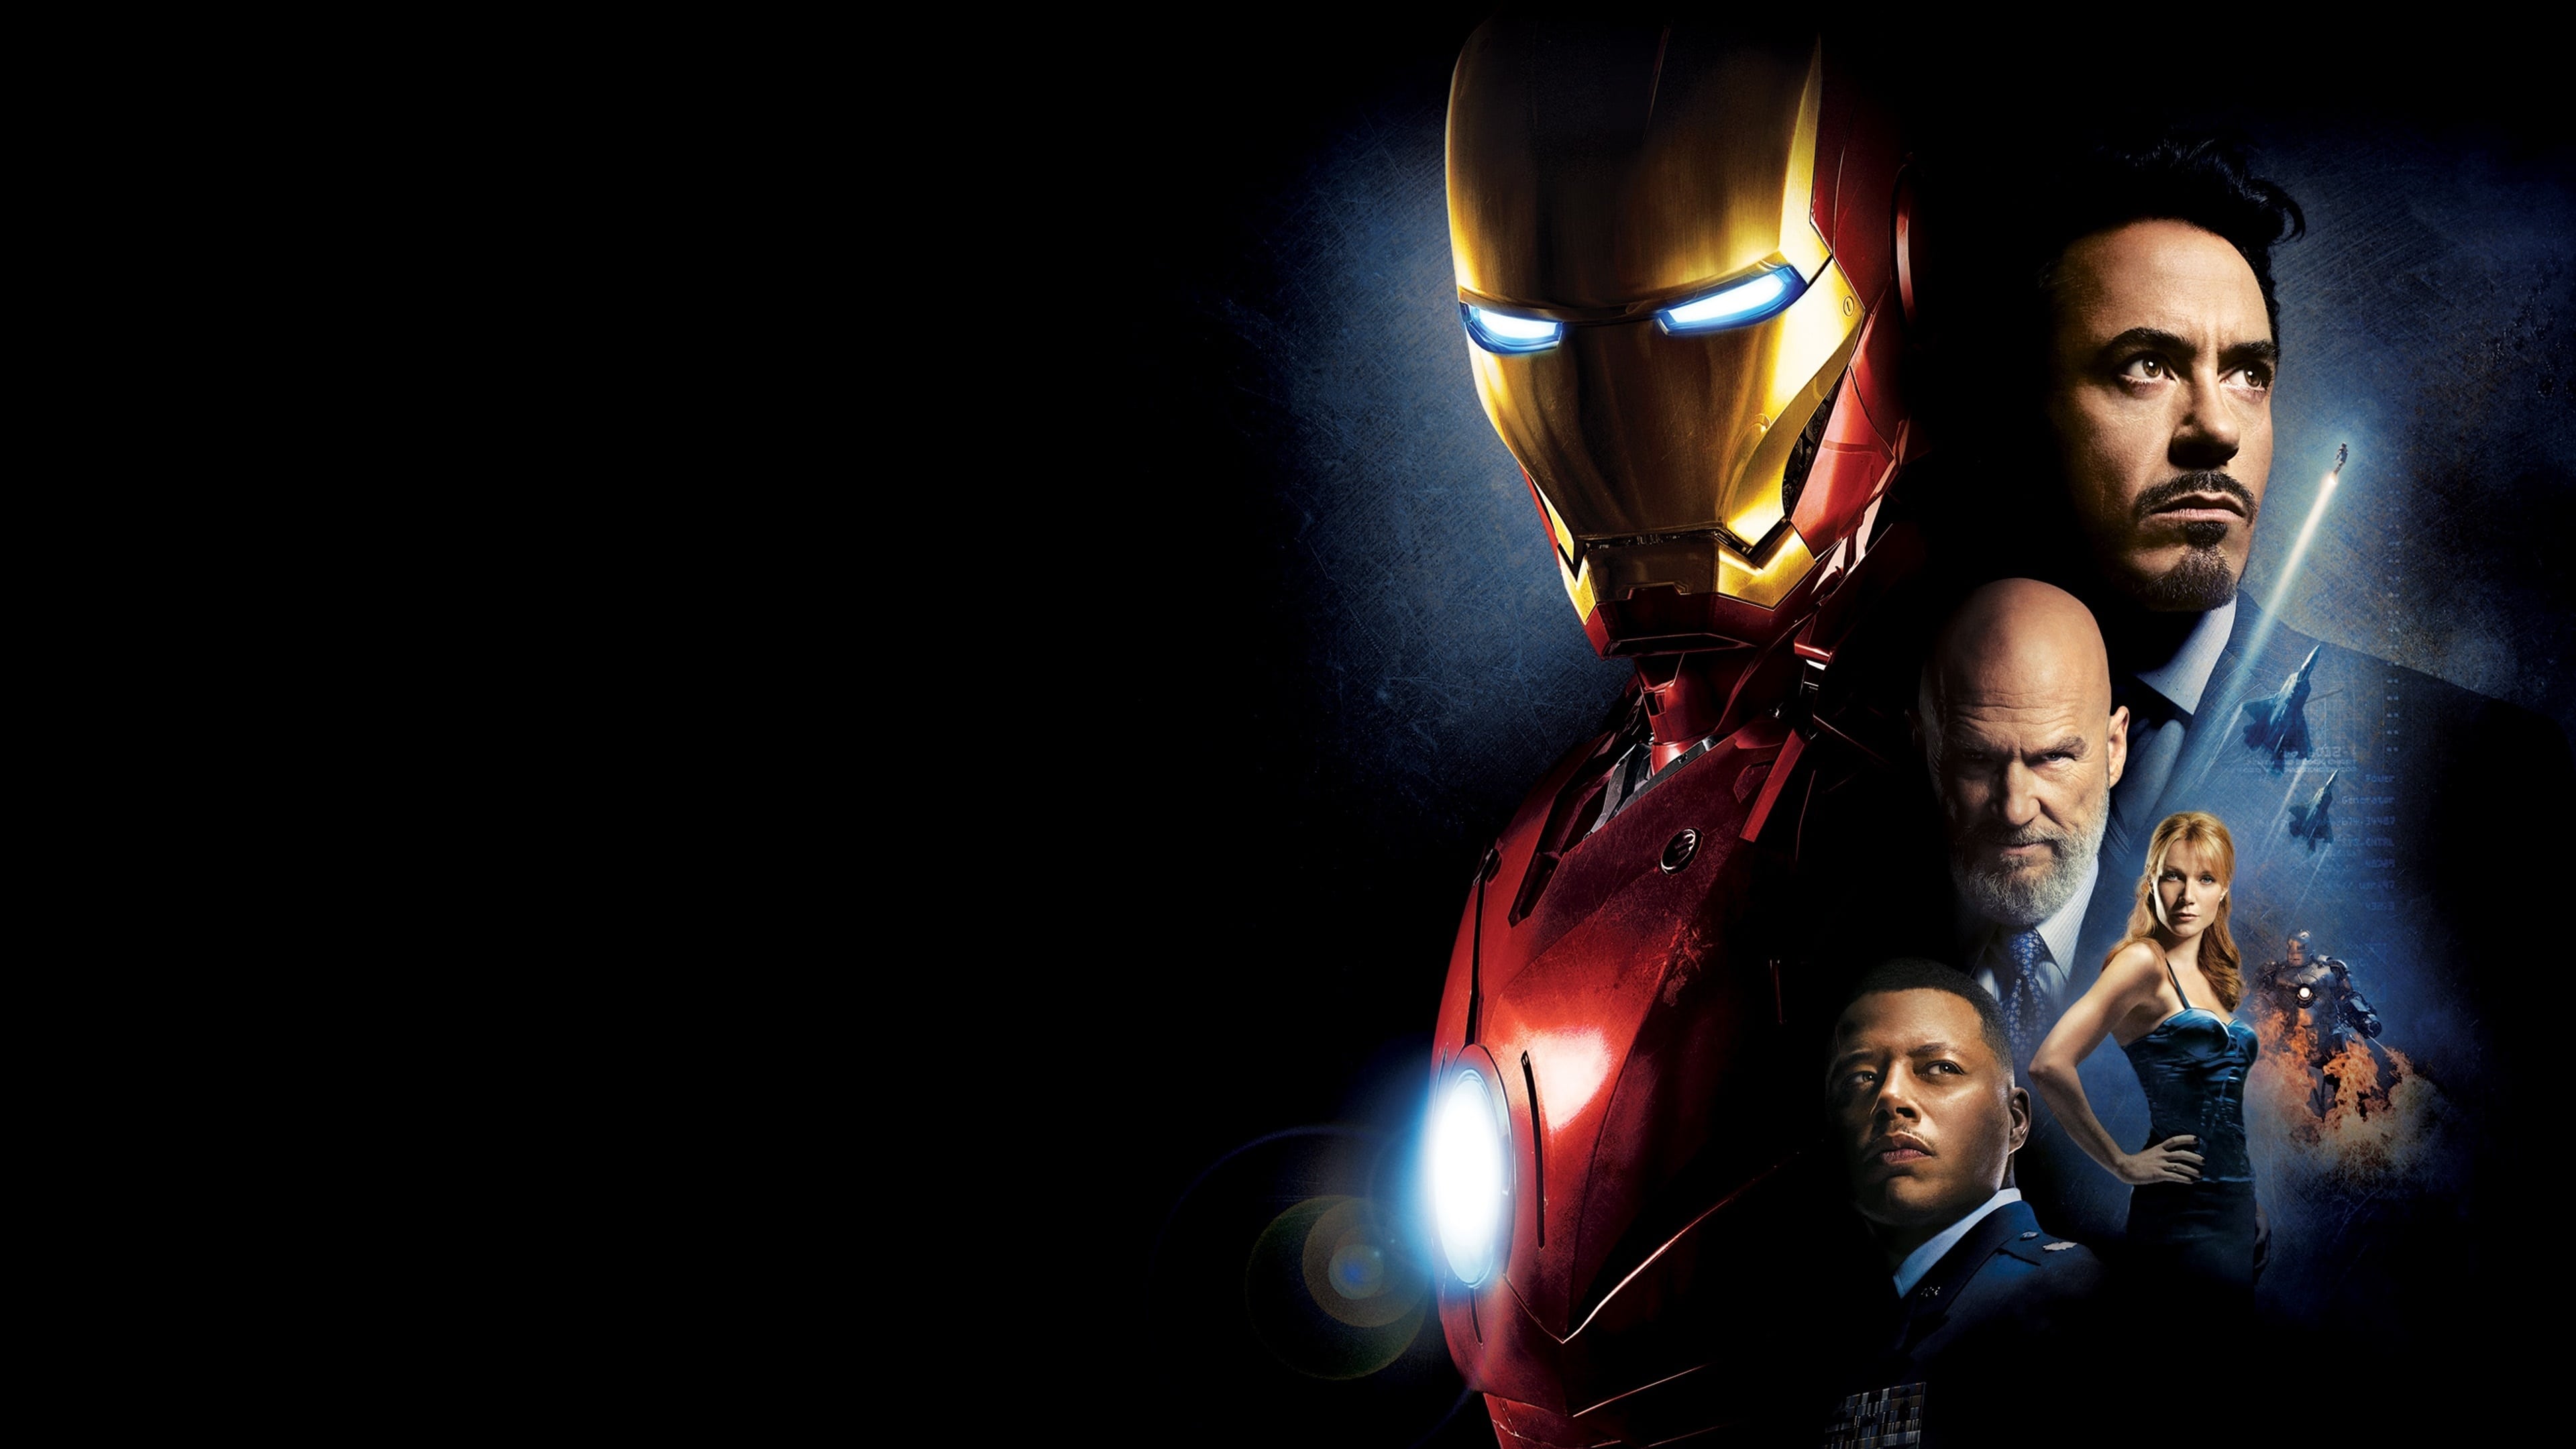 Poster Phim Người Sắt (Iron man)